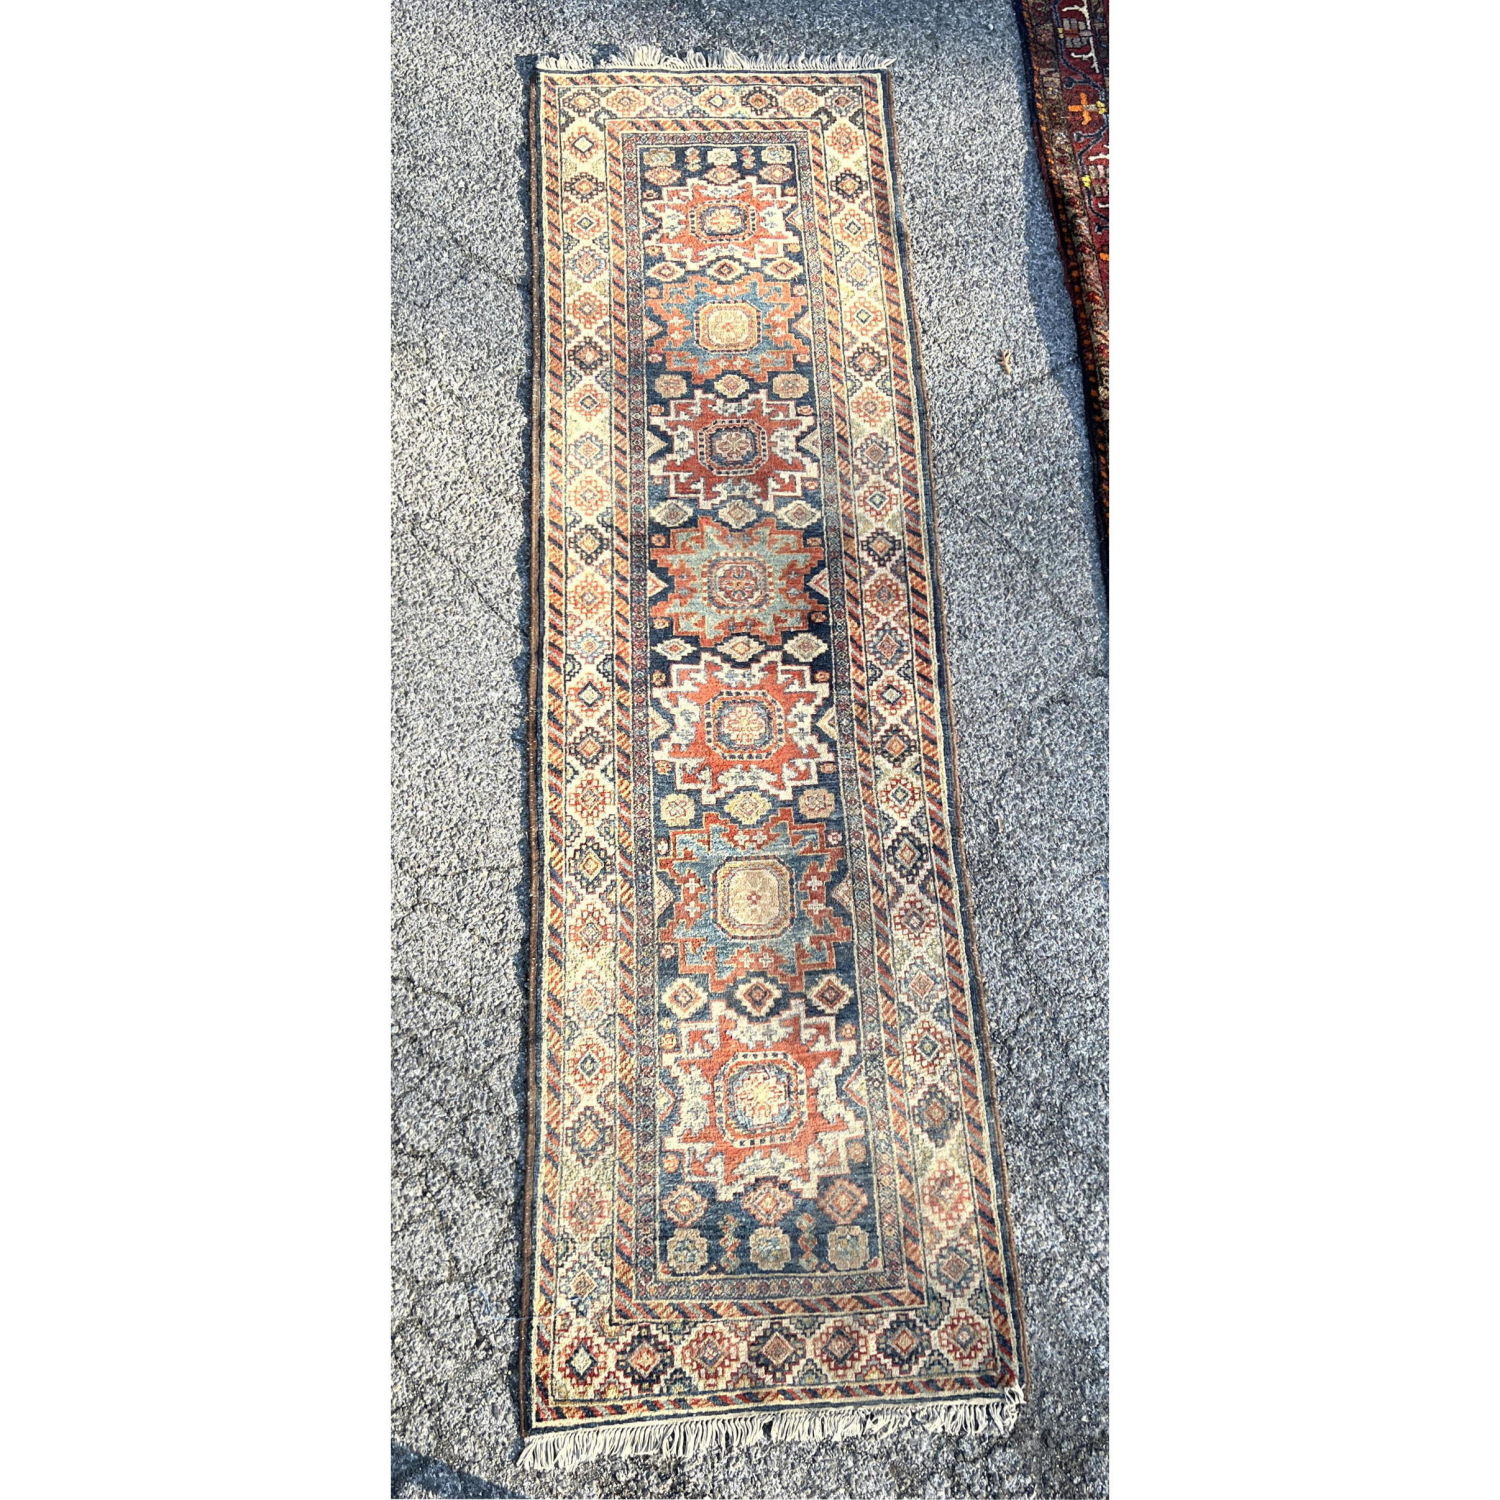 4 8 x 7 5 Handmade Oriental Carpet 2fed7d